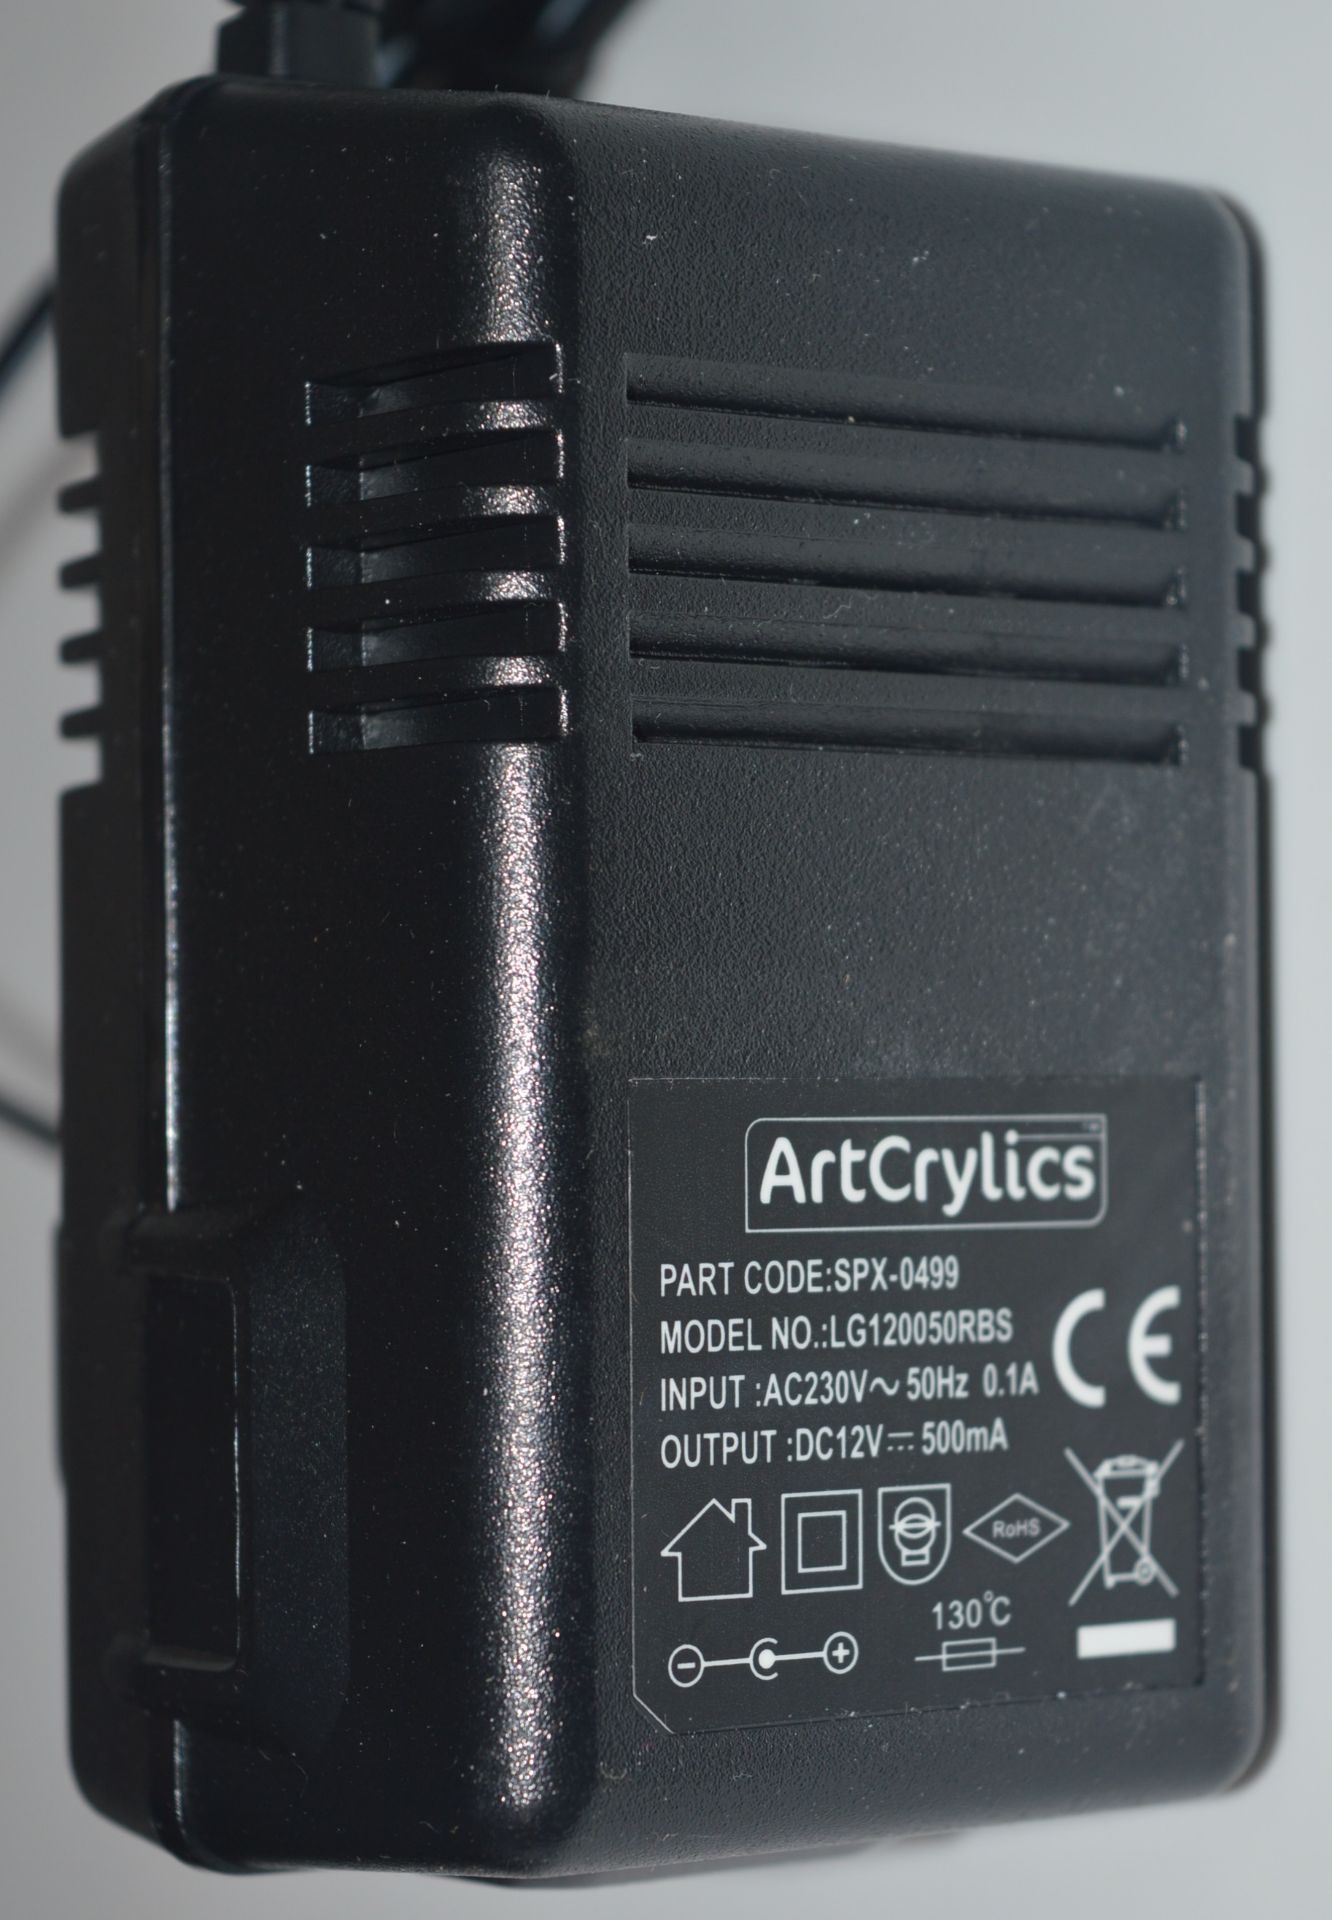 20 x ArtCrylics AC Power Adaptors - Input AC230-50Hz 0.1a - Output 12VDC 500mA - UK Plug - Model LG1 - Image 3 of 5